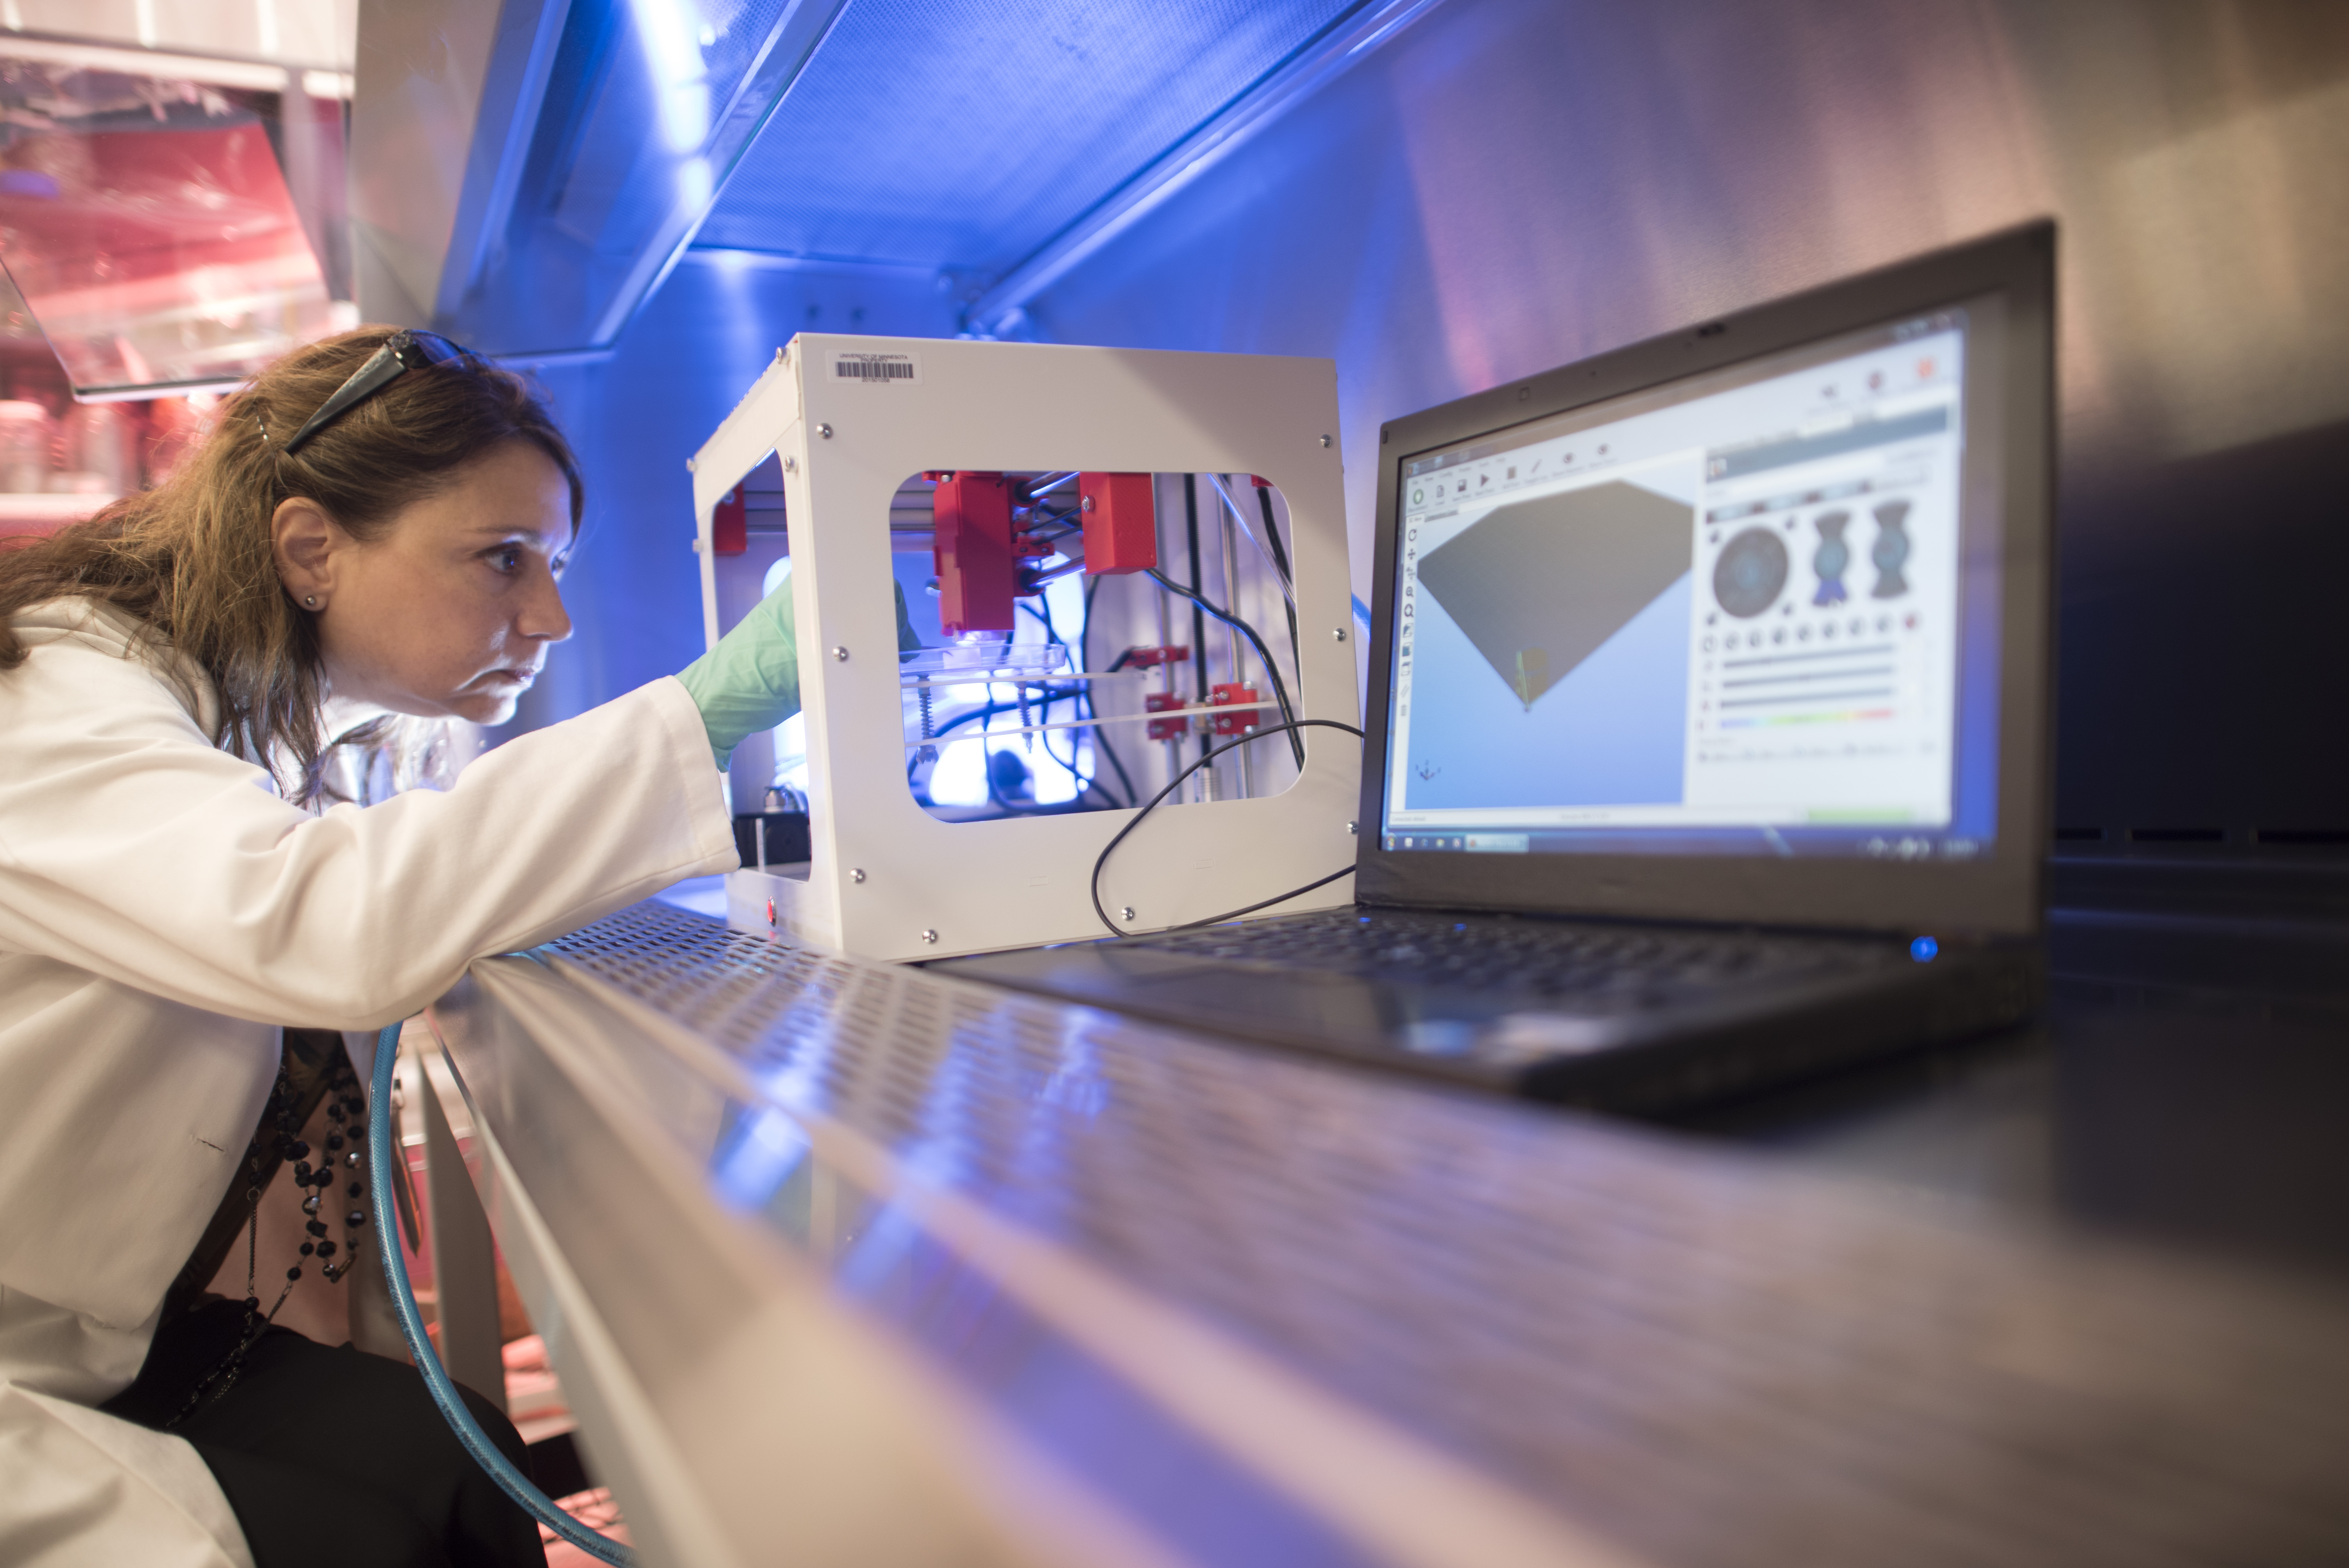 Researcher in a white coat at a 3D printer